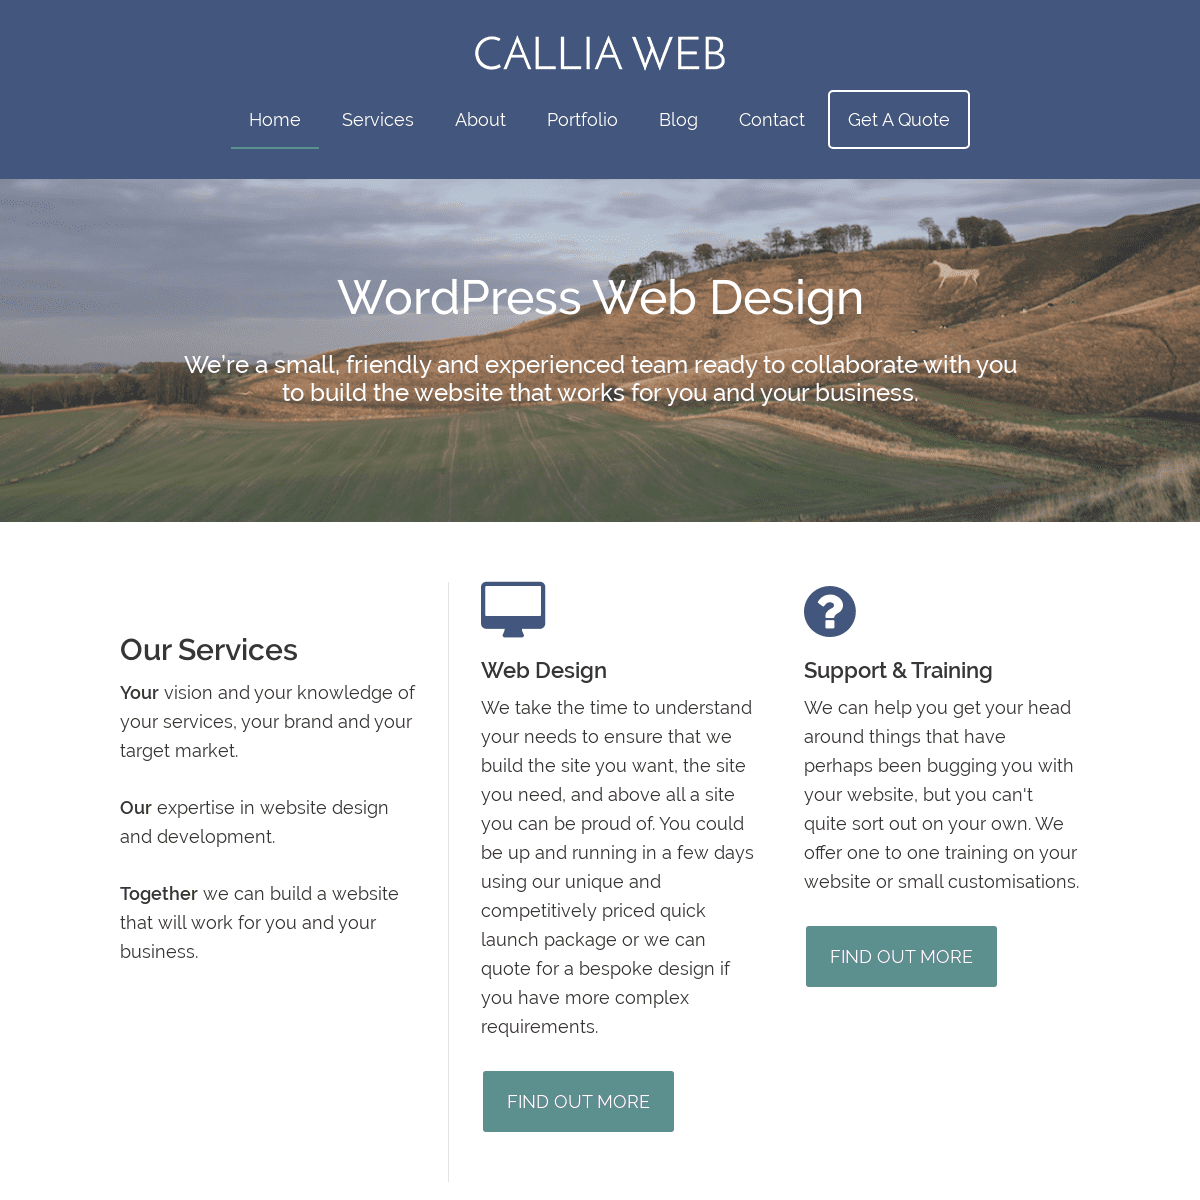 A complete backup of calliaweb.co.uk